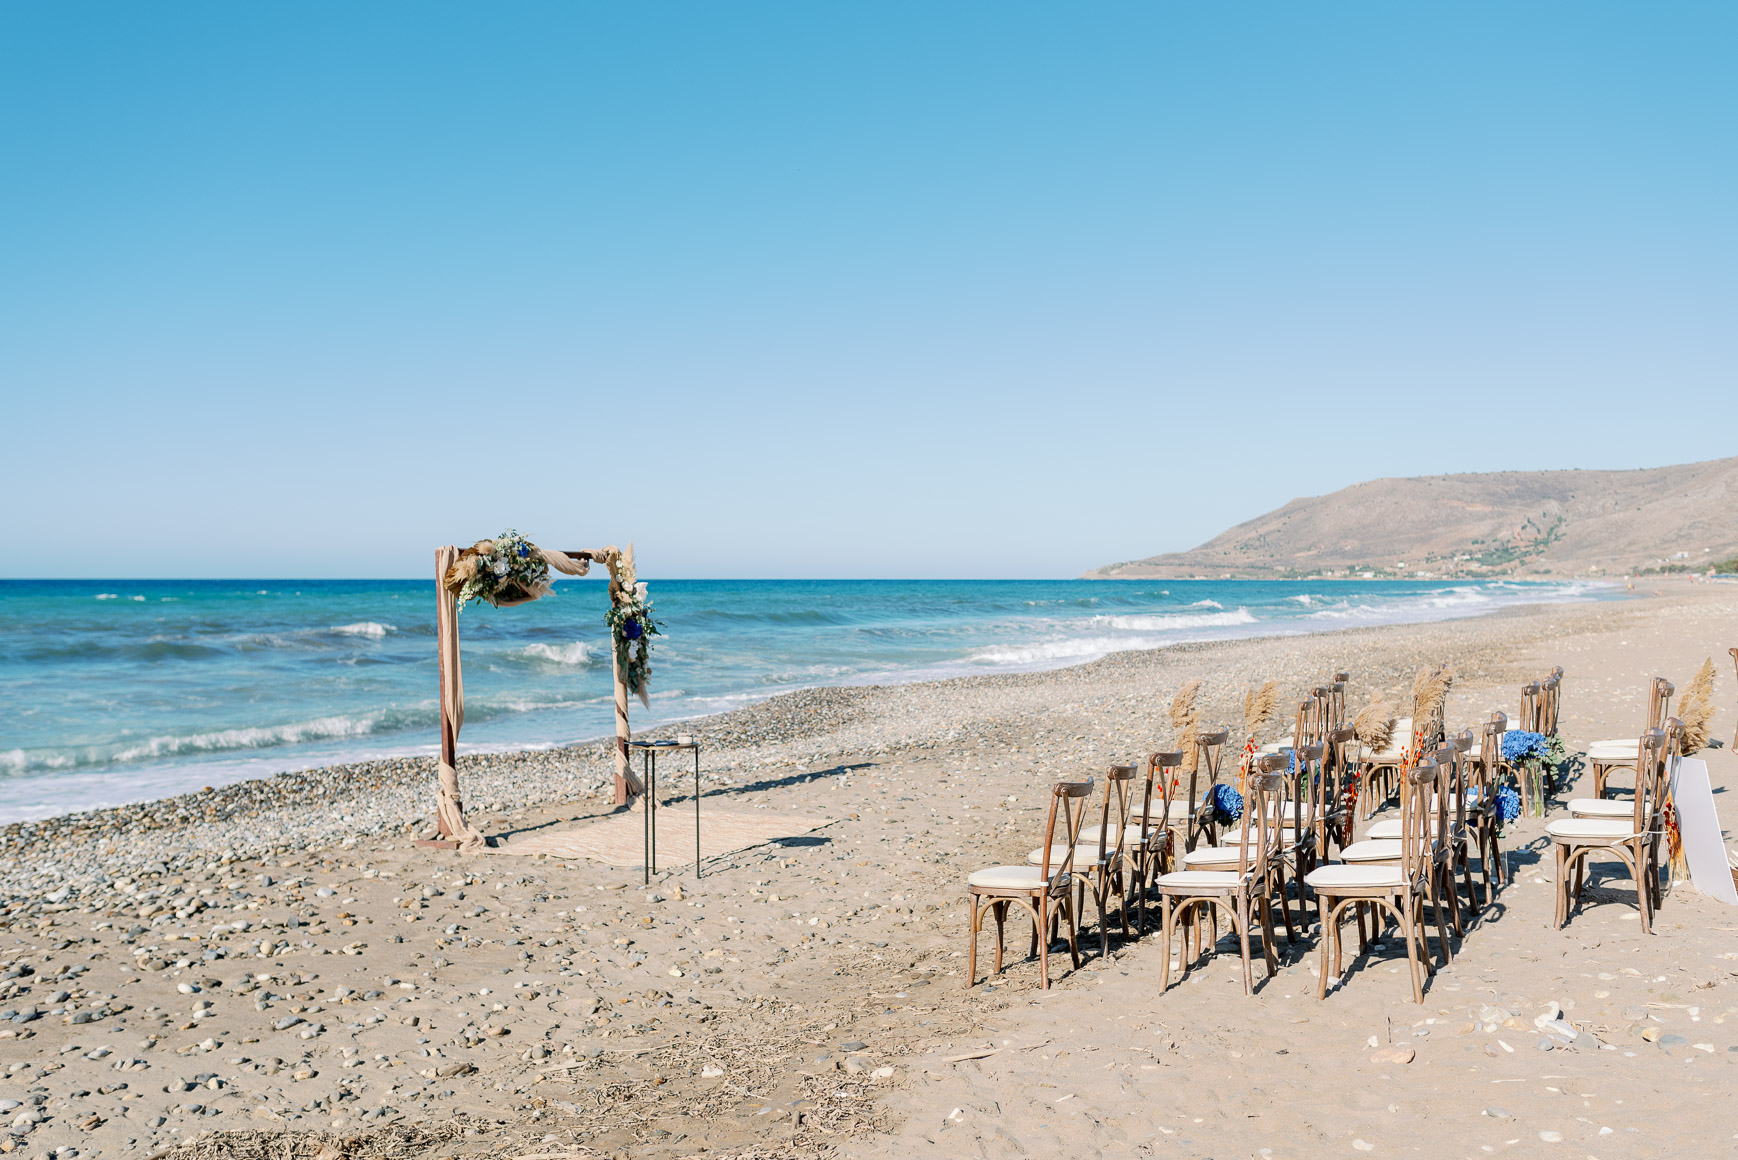 Wedding photographer Crete - Photographer Crete - Photographer Rethymno - Wedding photographer in Rethymno Crete